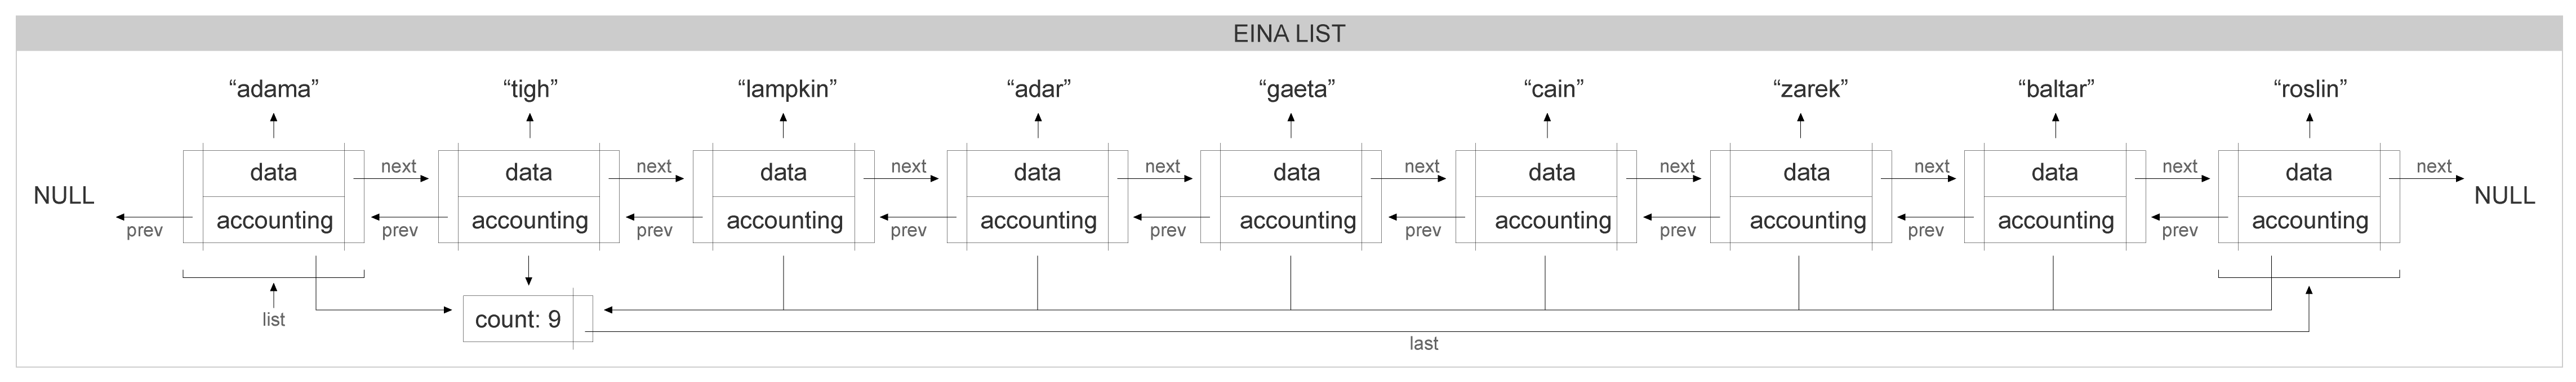 eina_list_example_01_b.png